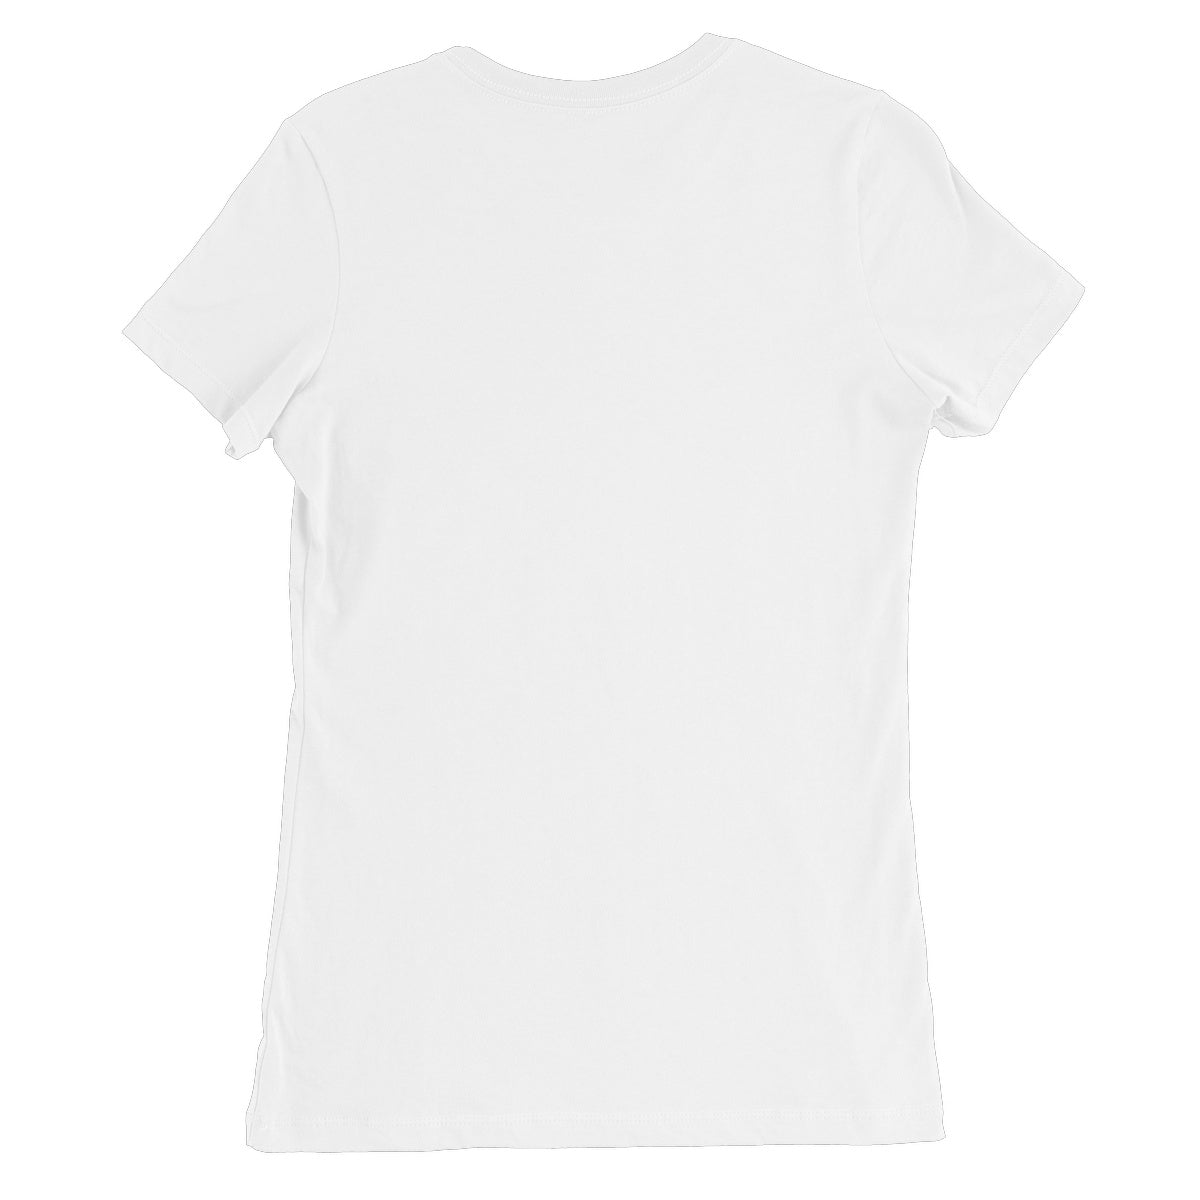 Möbius Flow, Autumn Sphere Women's Favourite T-Shirt